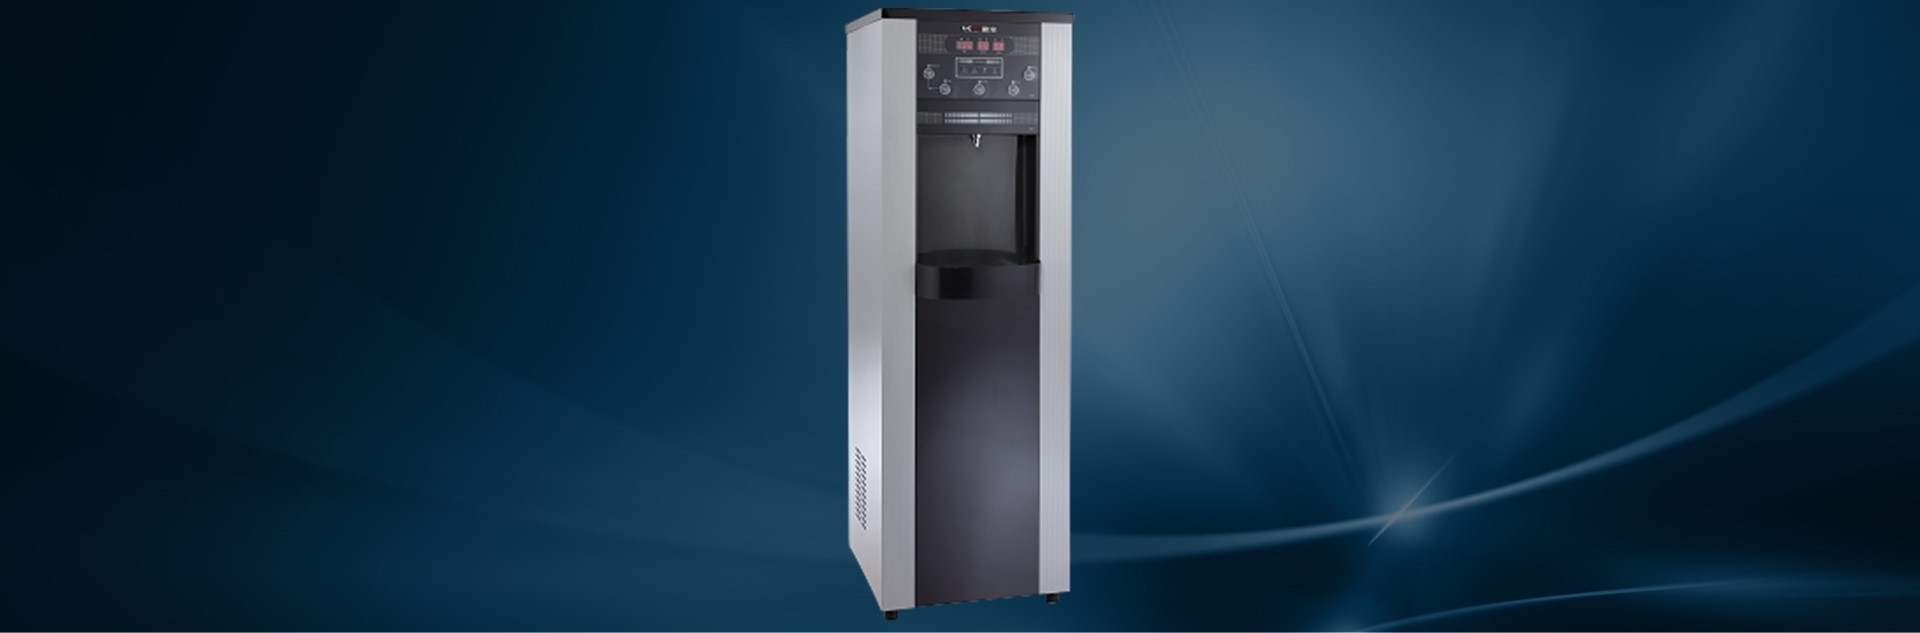 LC-2011 SeriesIntelligent Microcomputer Controlled Water Dispenser